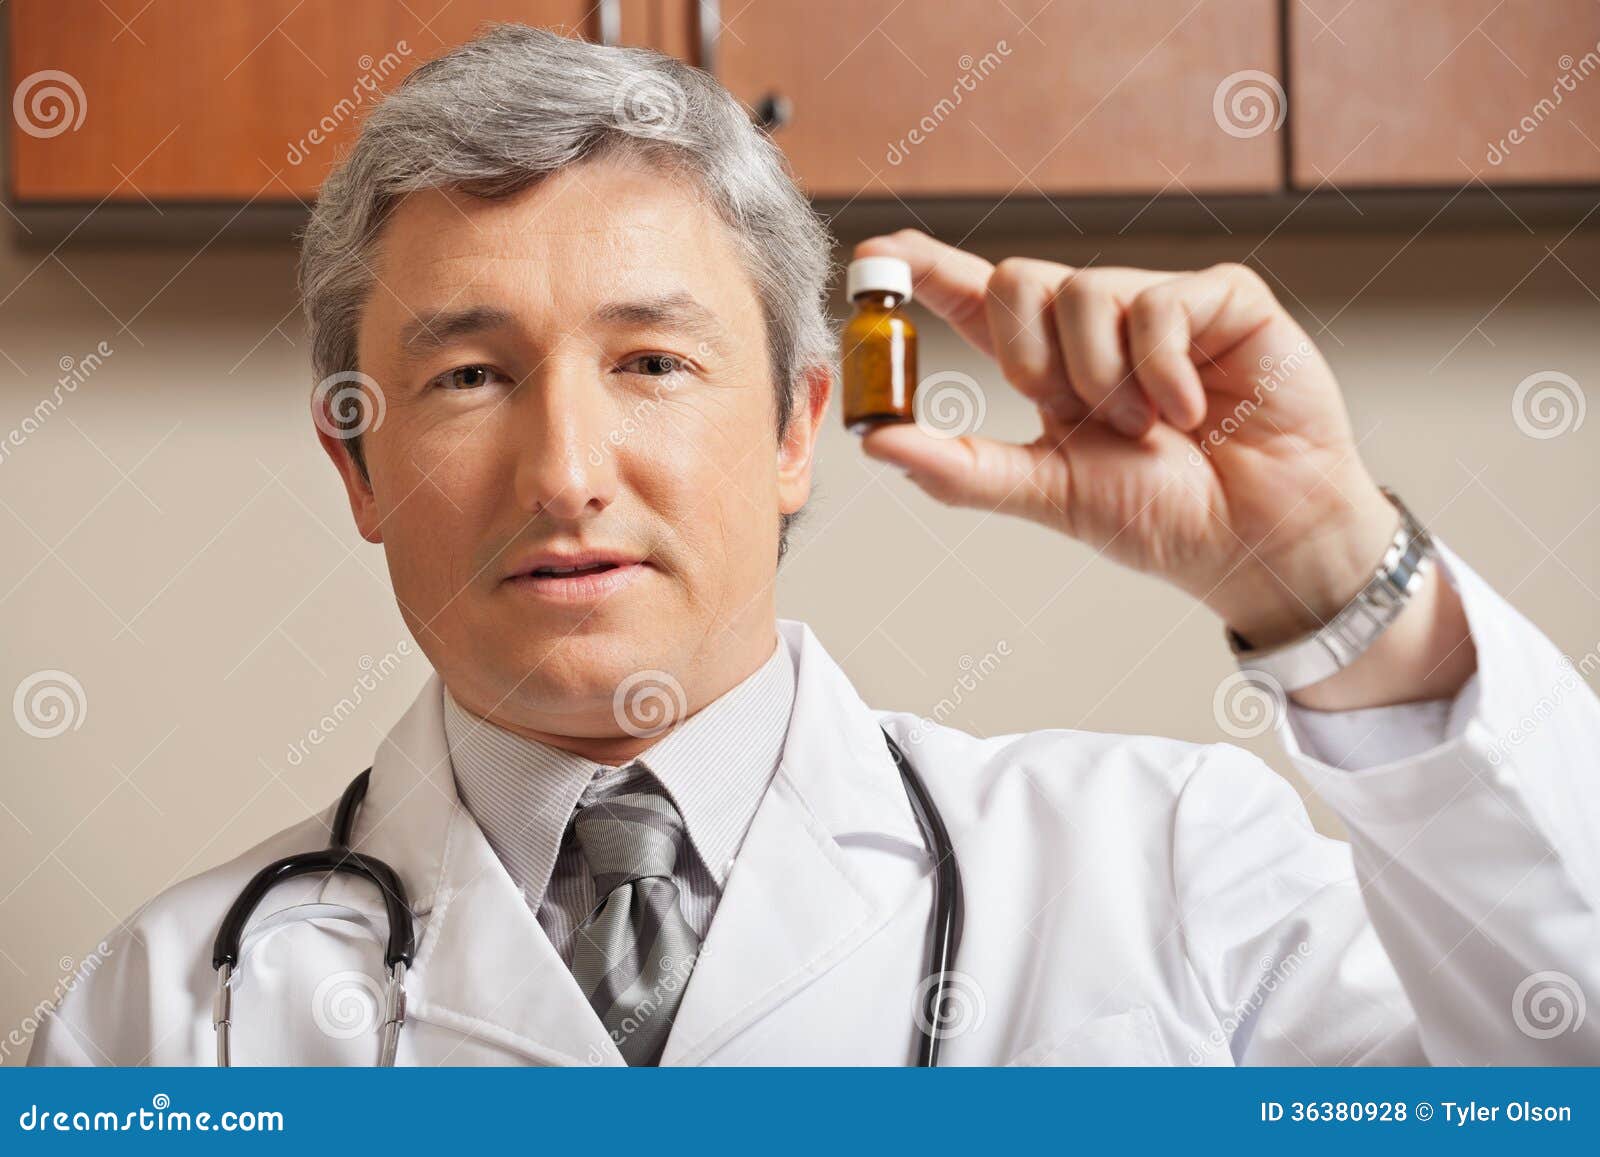 Physician Holding Medicine Bottle Stock Photo - Image of practitioner ...